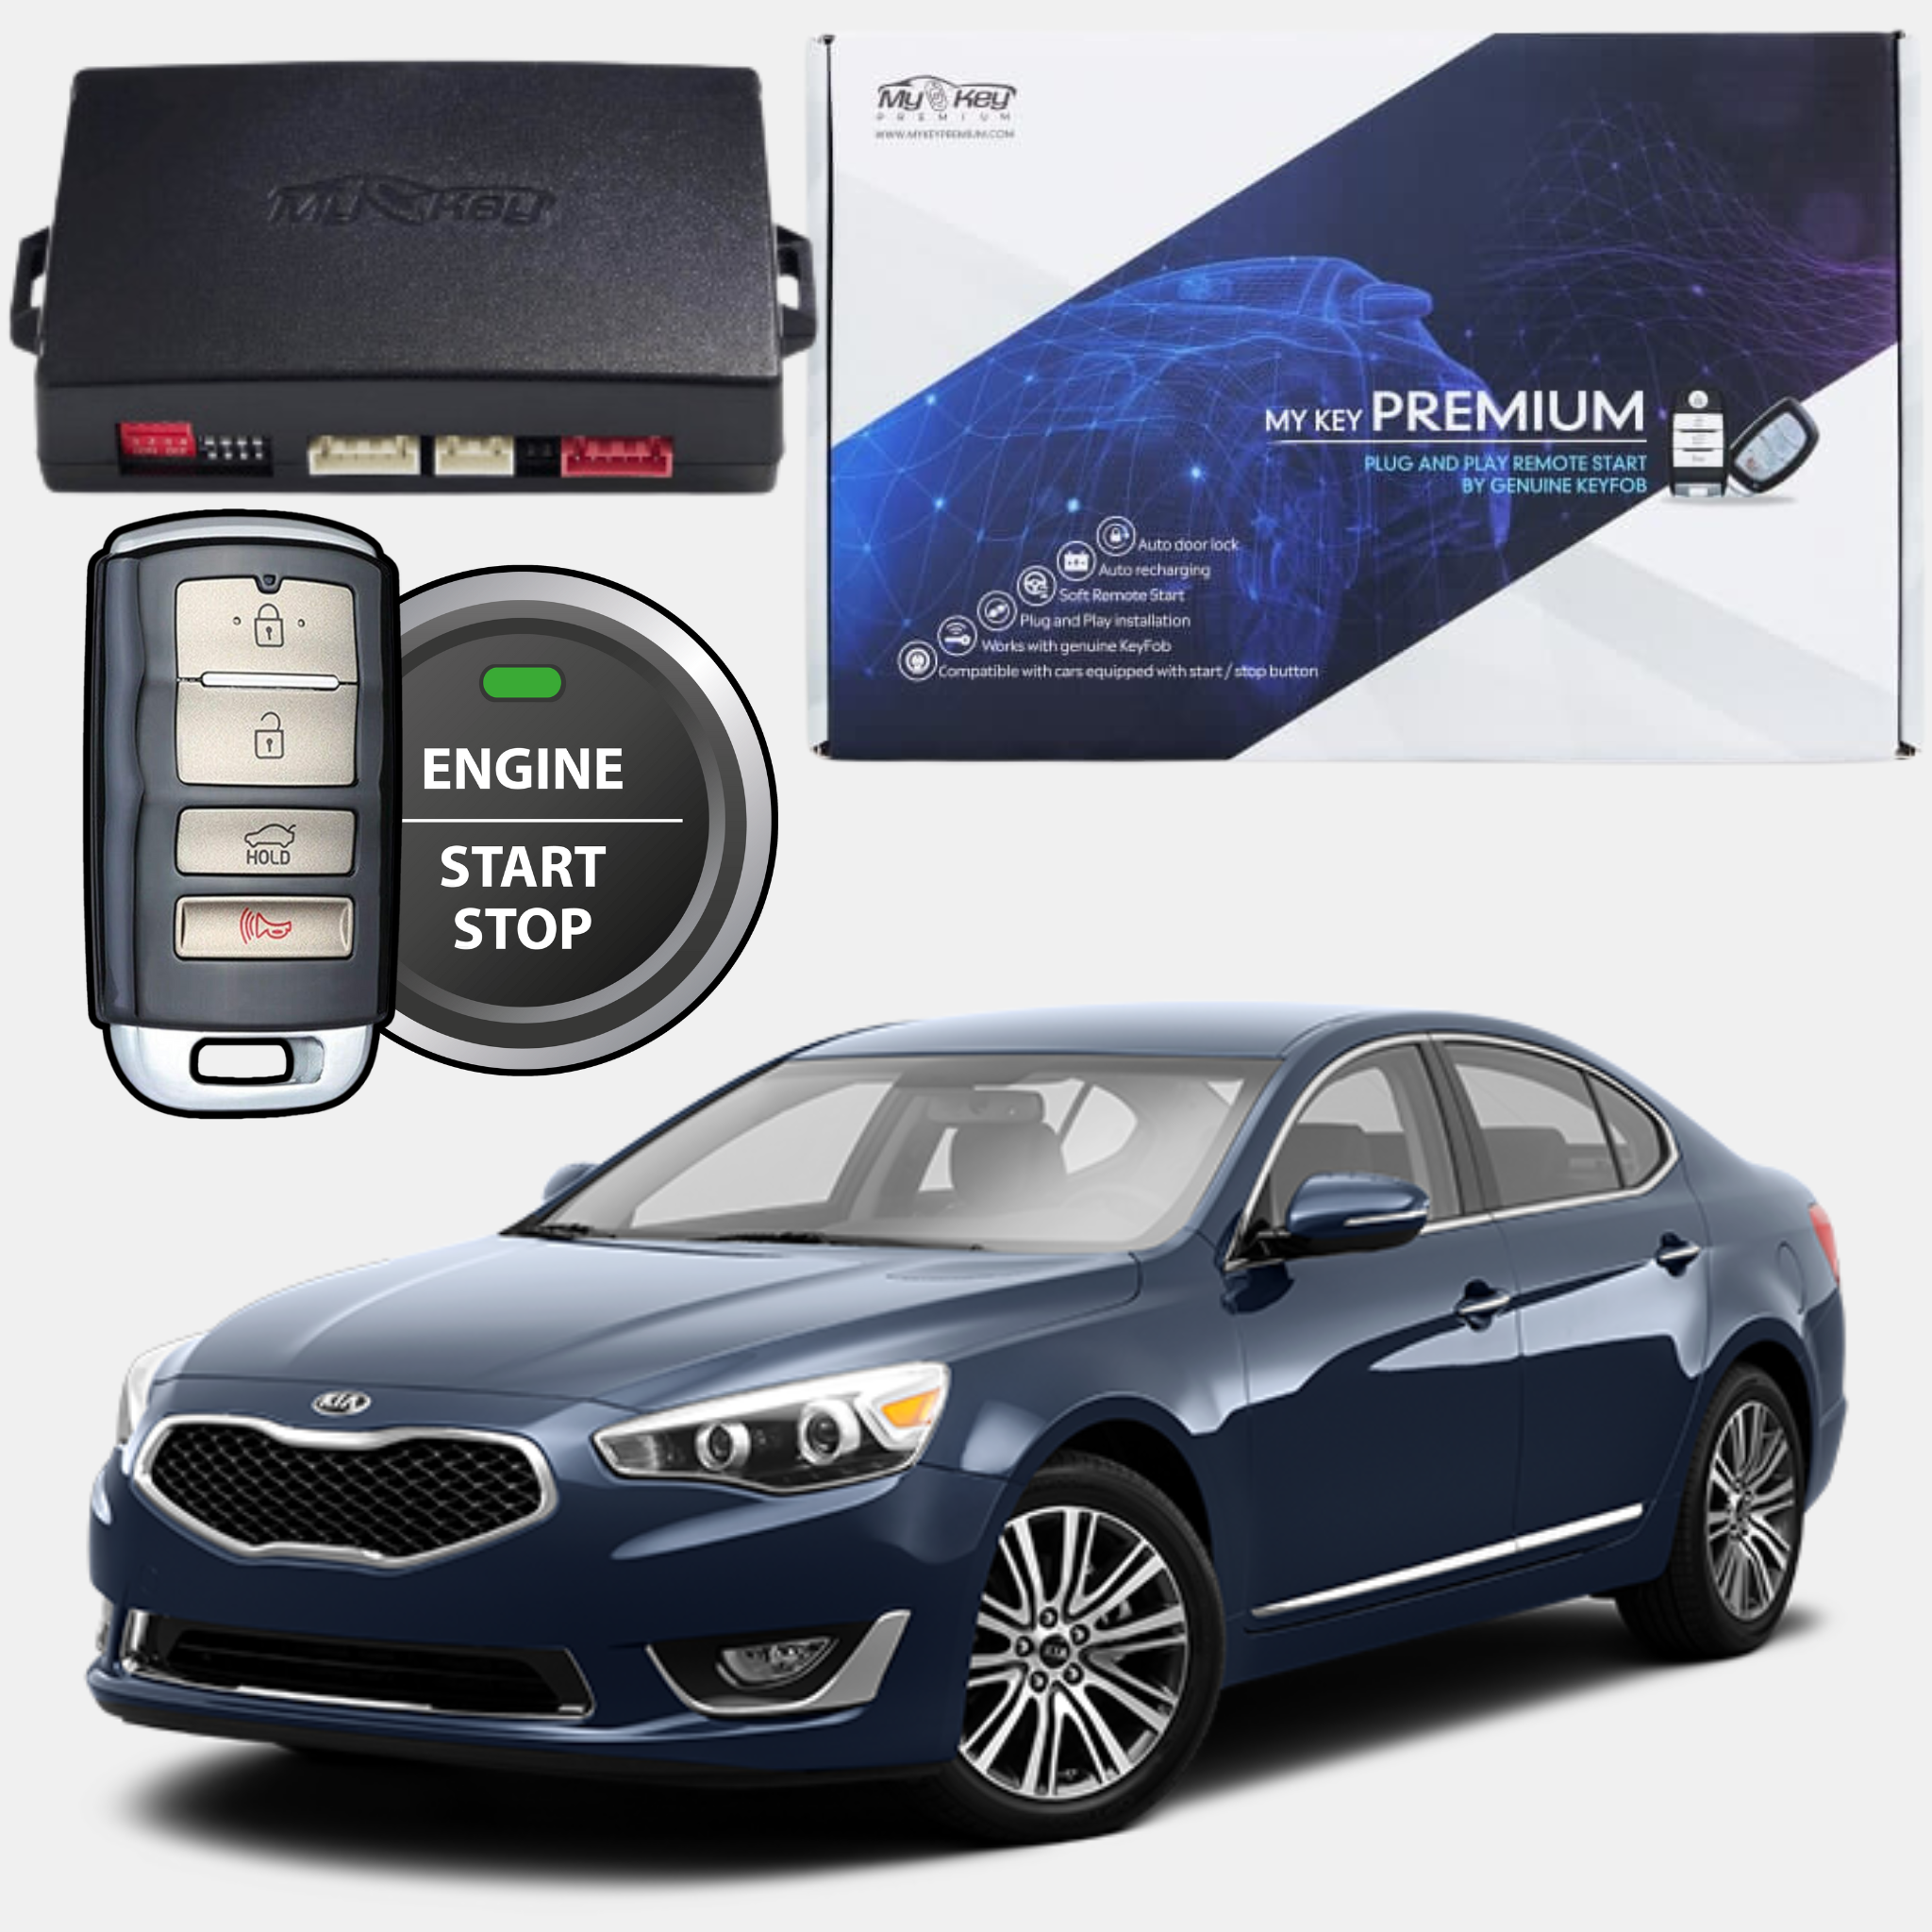 kia cadenza 2014 - 2017 remote engine auto starter kit plug and play my key premium